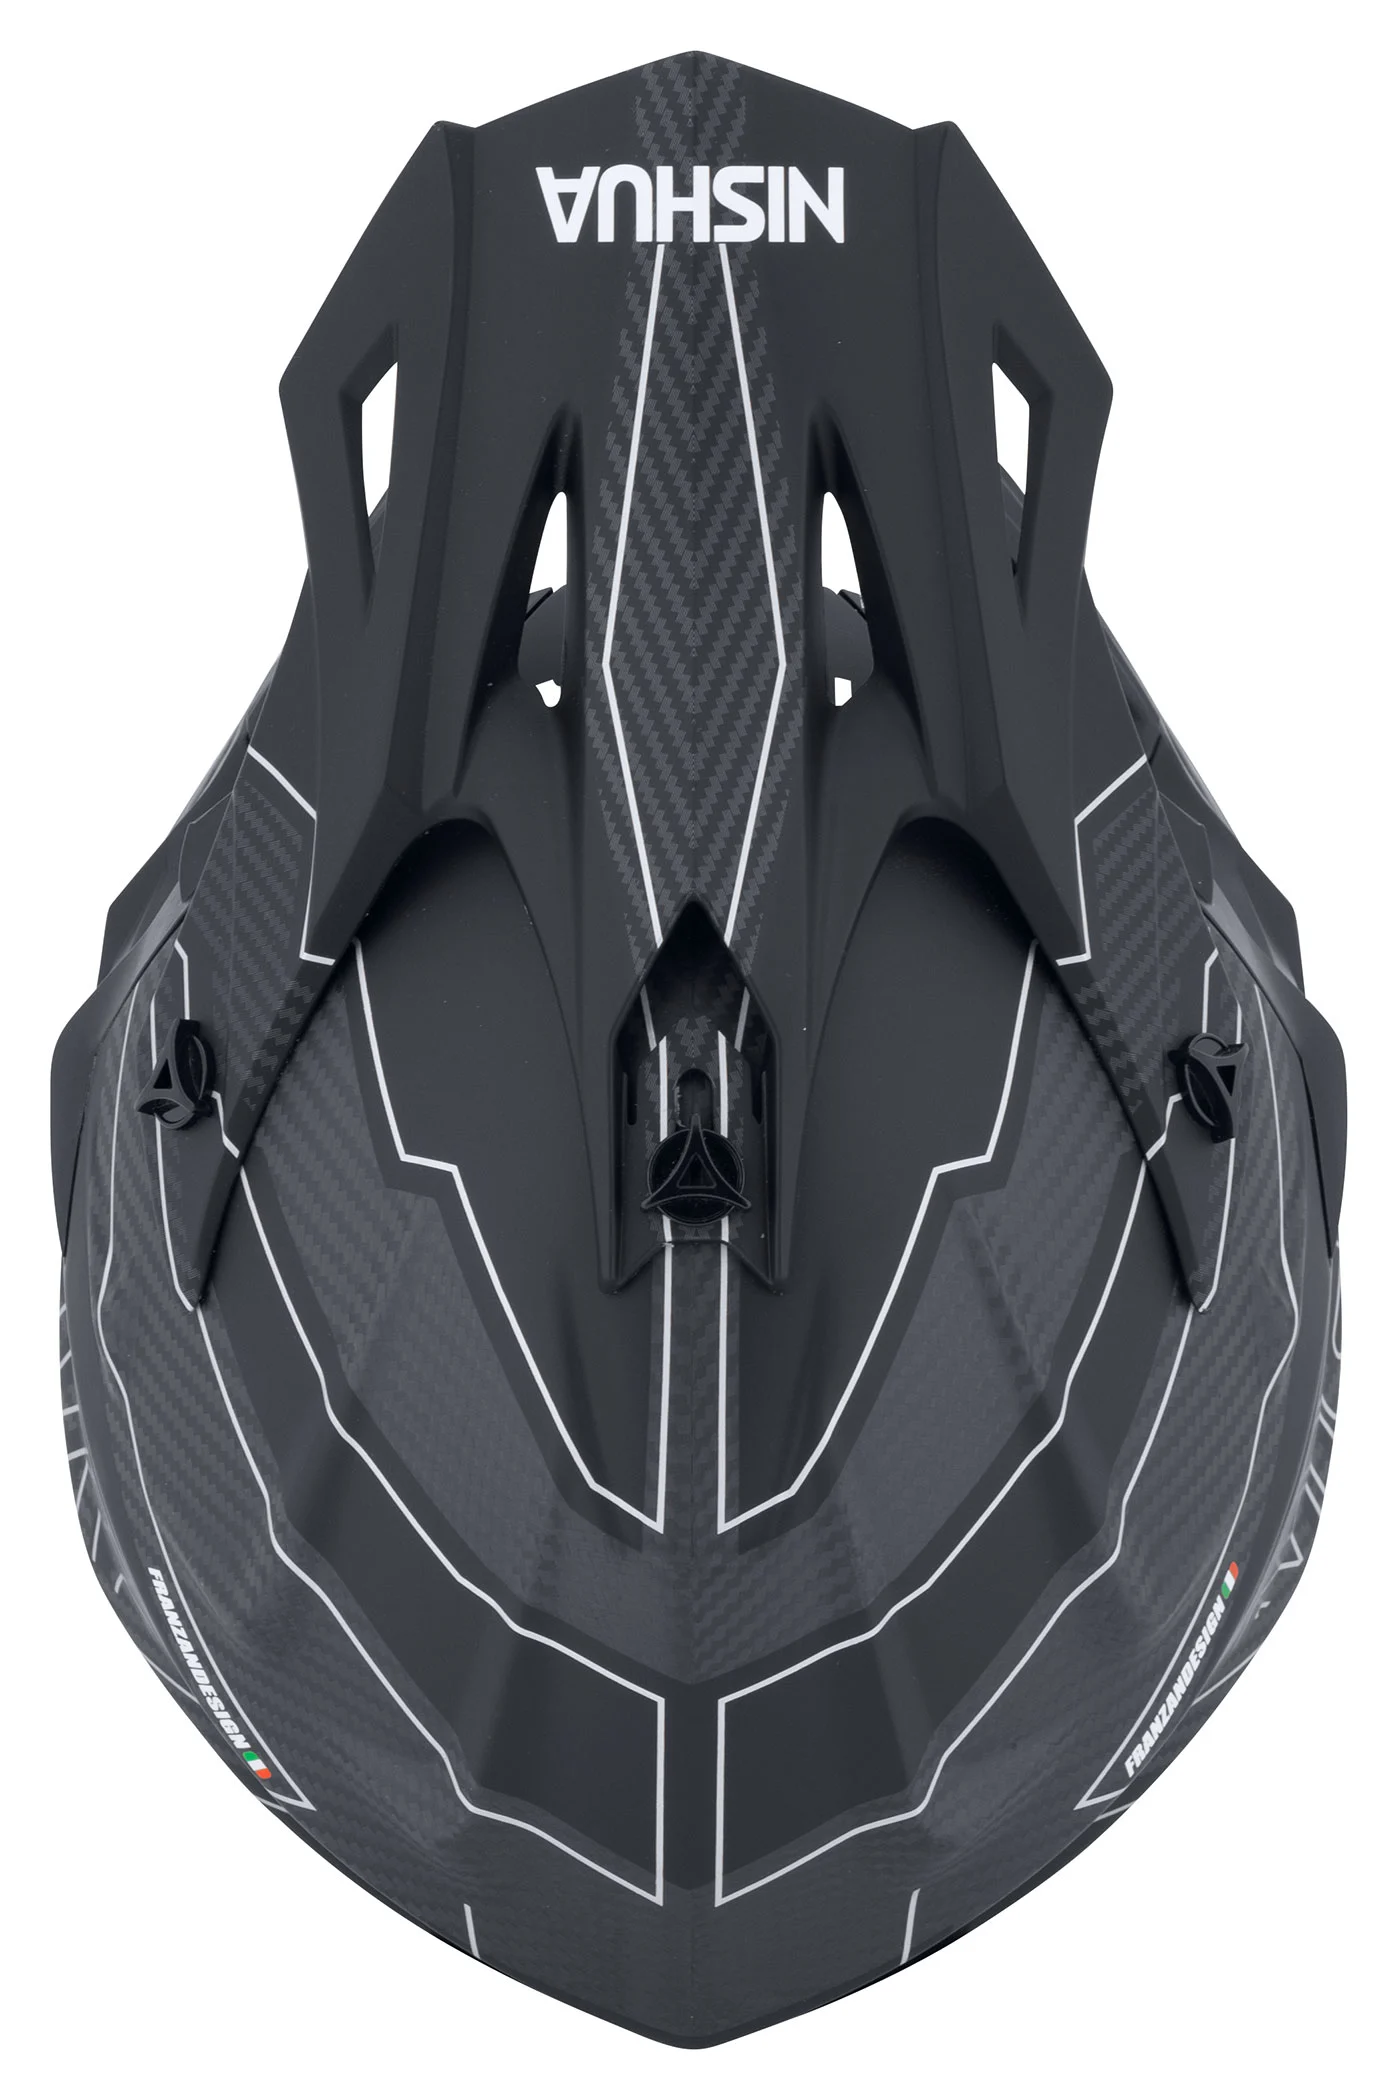 Louis Moto's Nishua Helmets Presents The Cross MX Off-Road Helmet